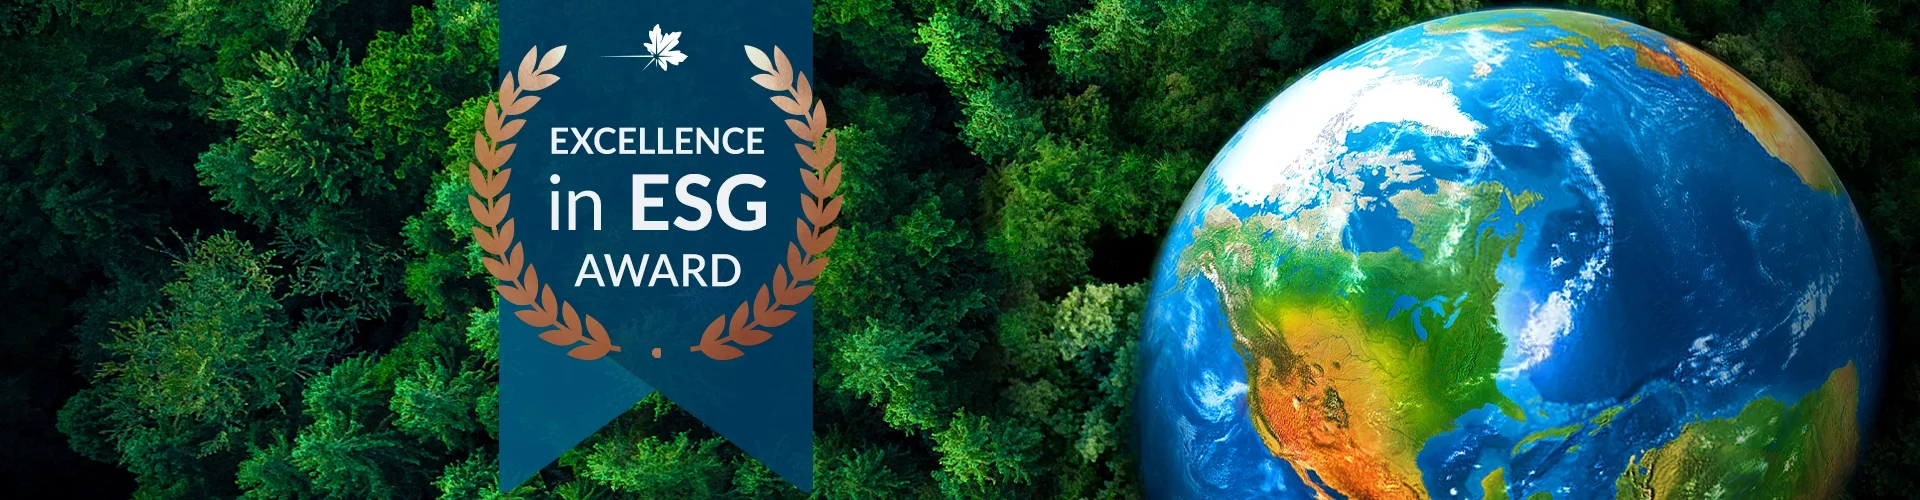 Blog Hero Excellence in ESG Award - Copperleaf Decision Analytics